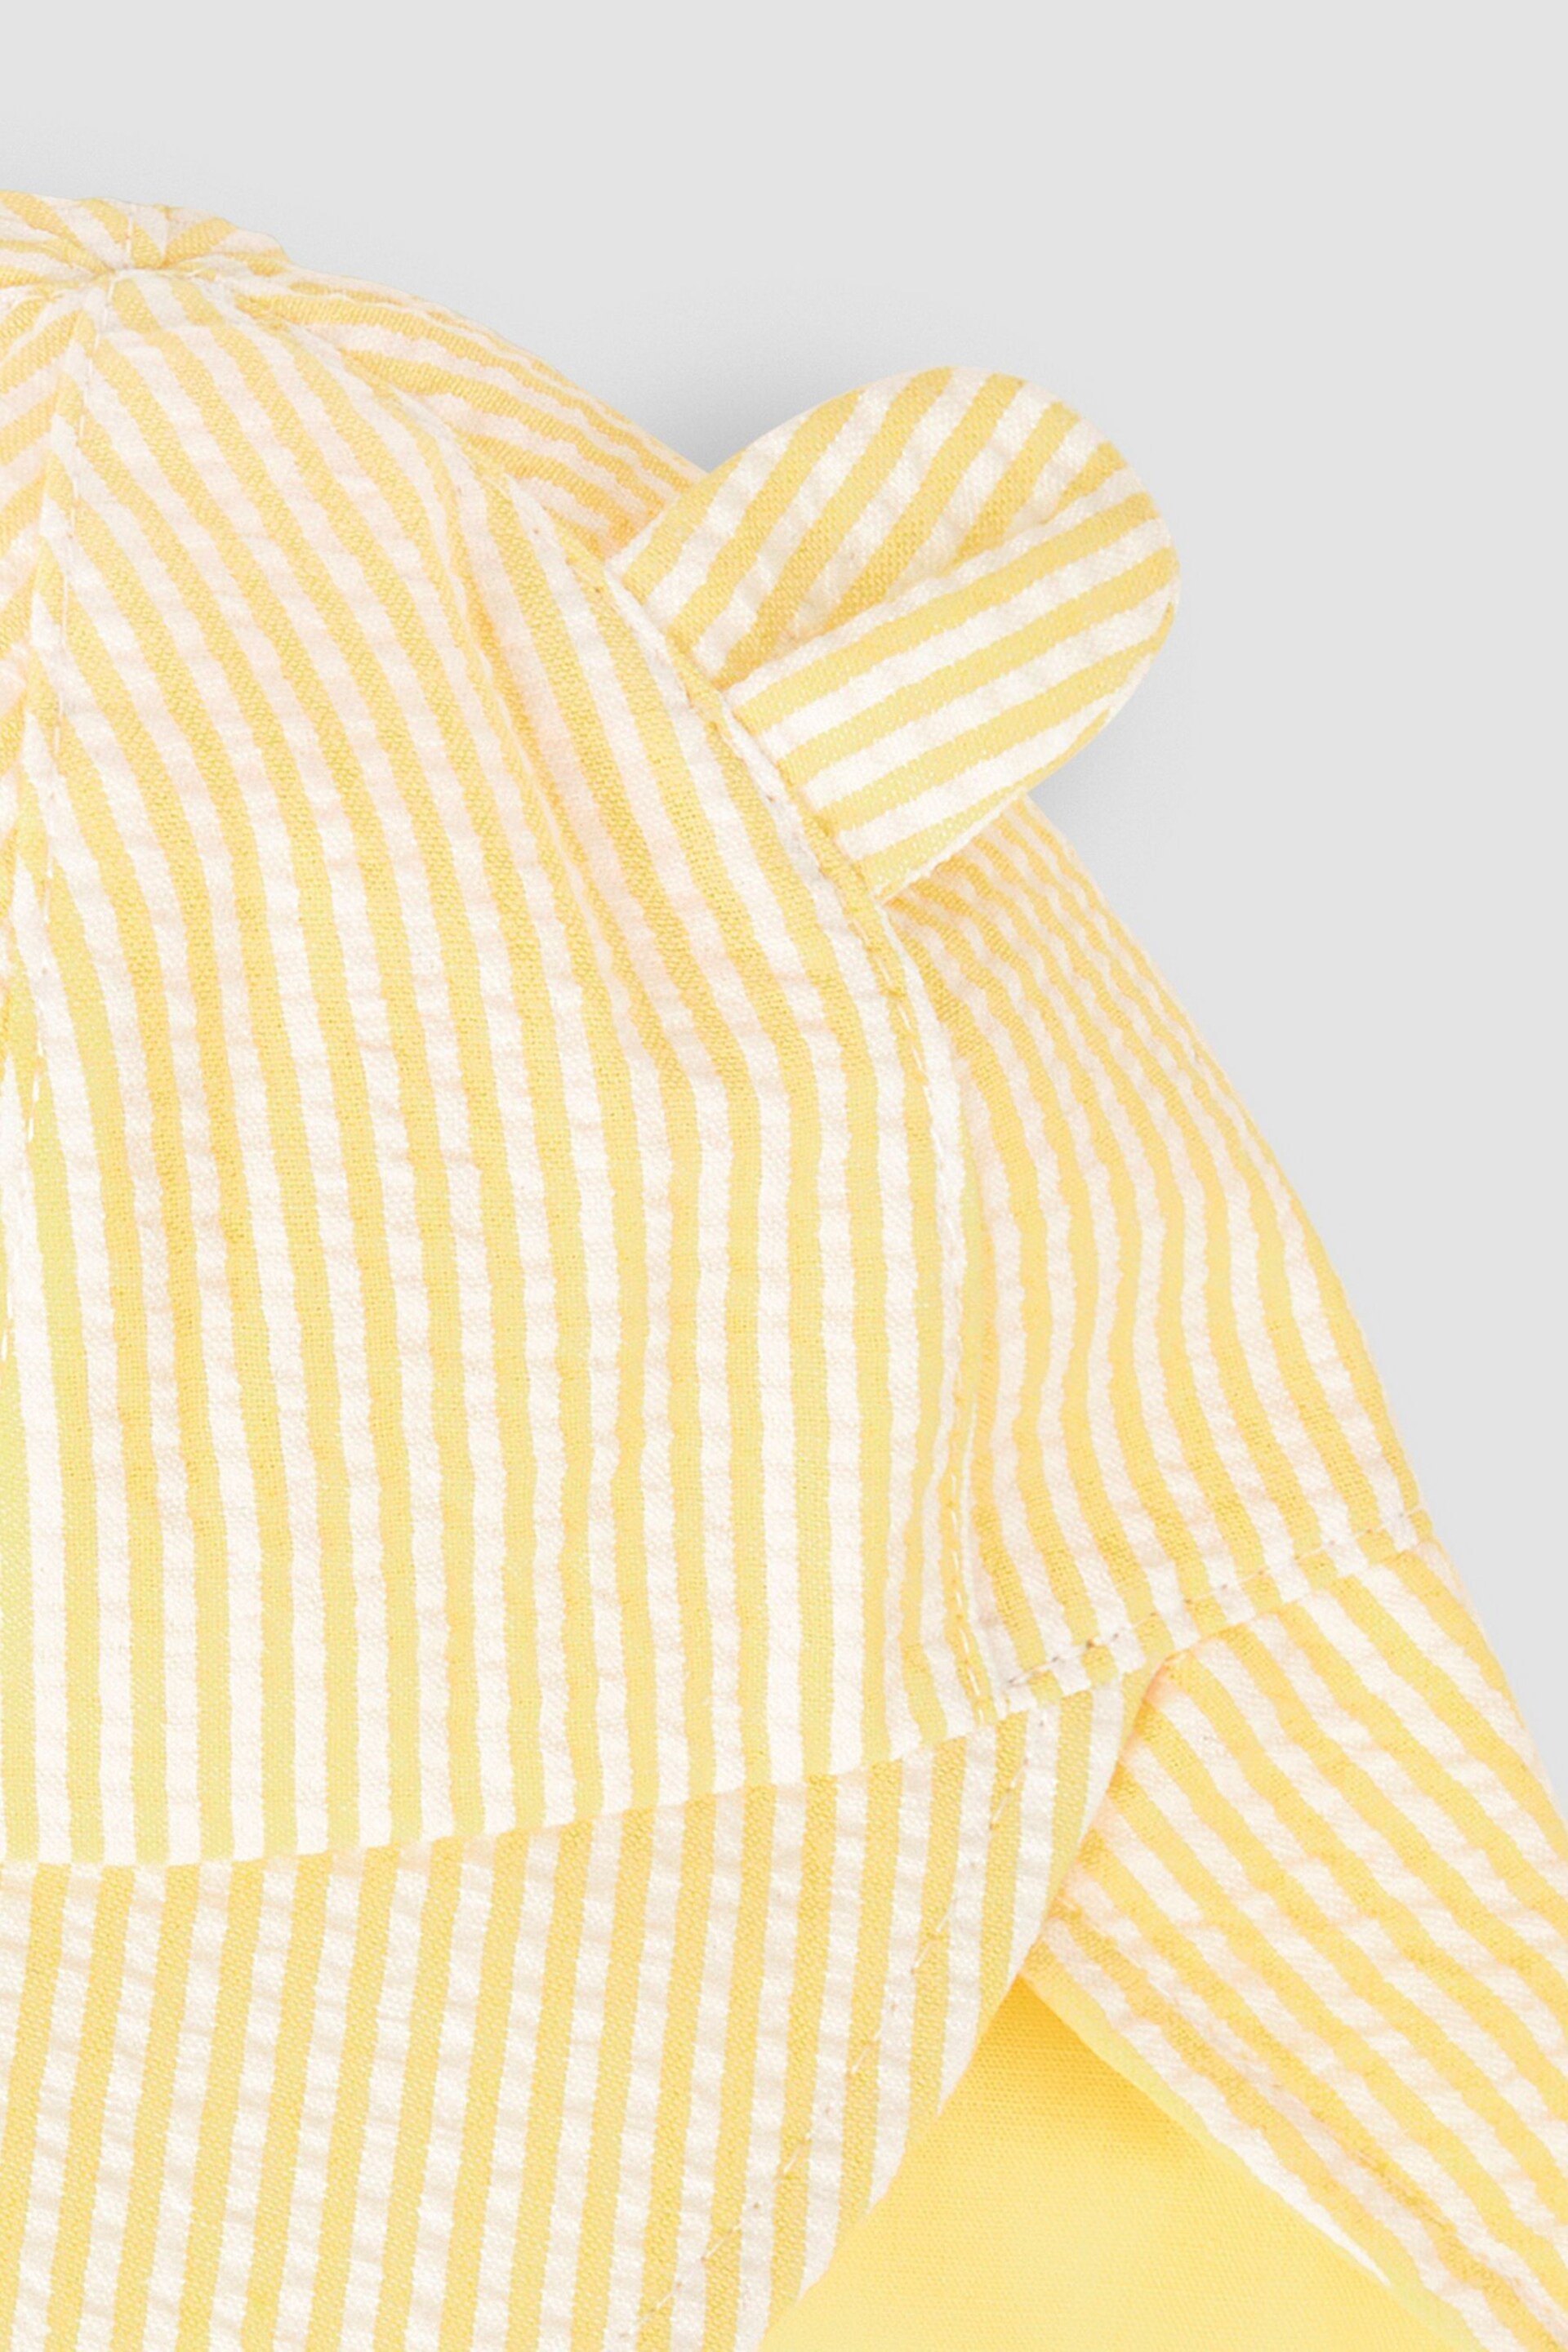 JoJo Maman Bébé Yellow Stripe Legionnaire Cap - Image 3 of 3